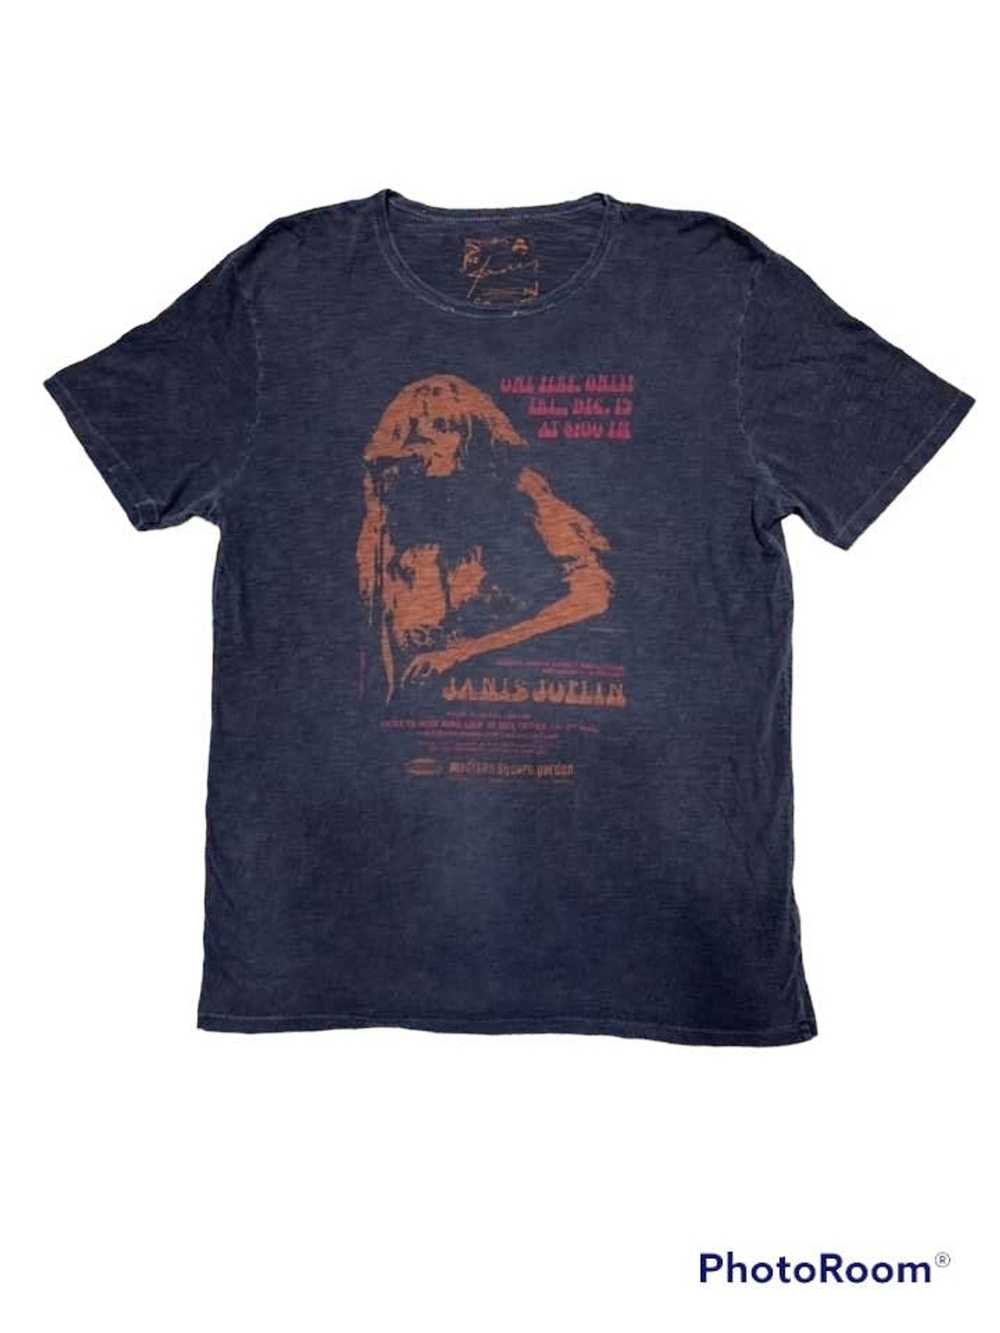 Made In Usa × Rock T Shirt Janis Joplin - image 1